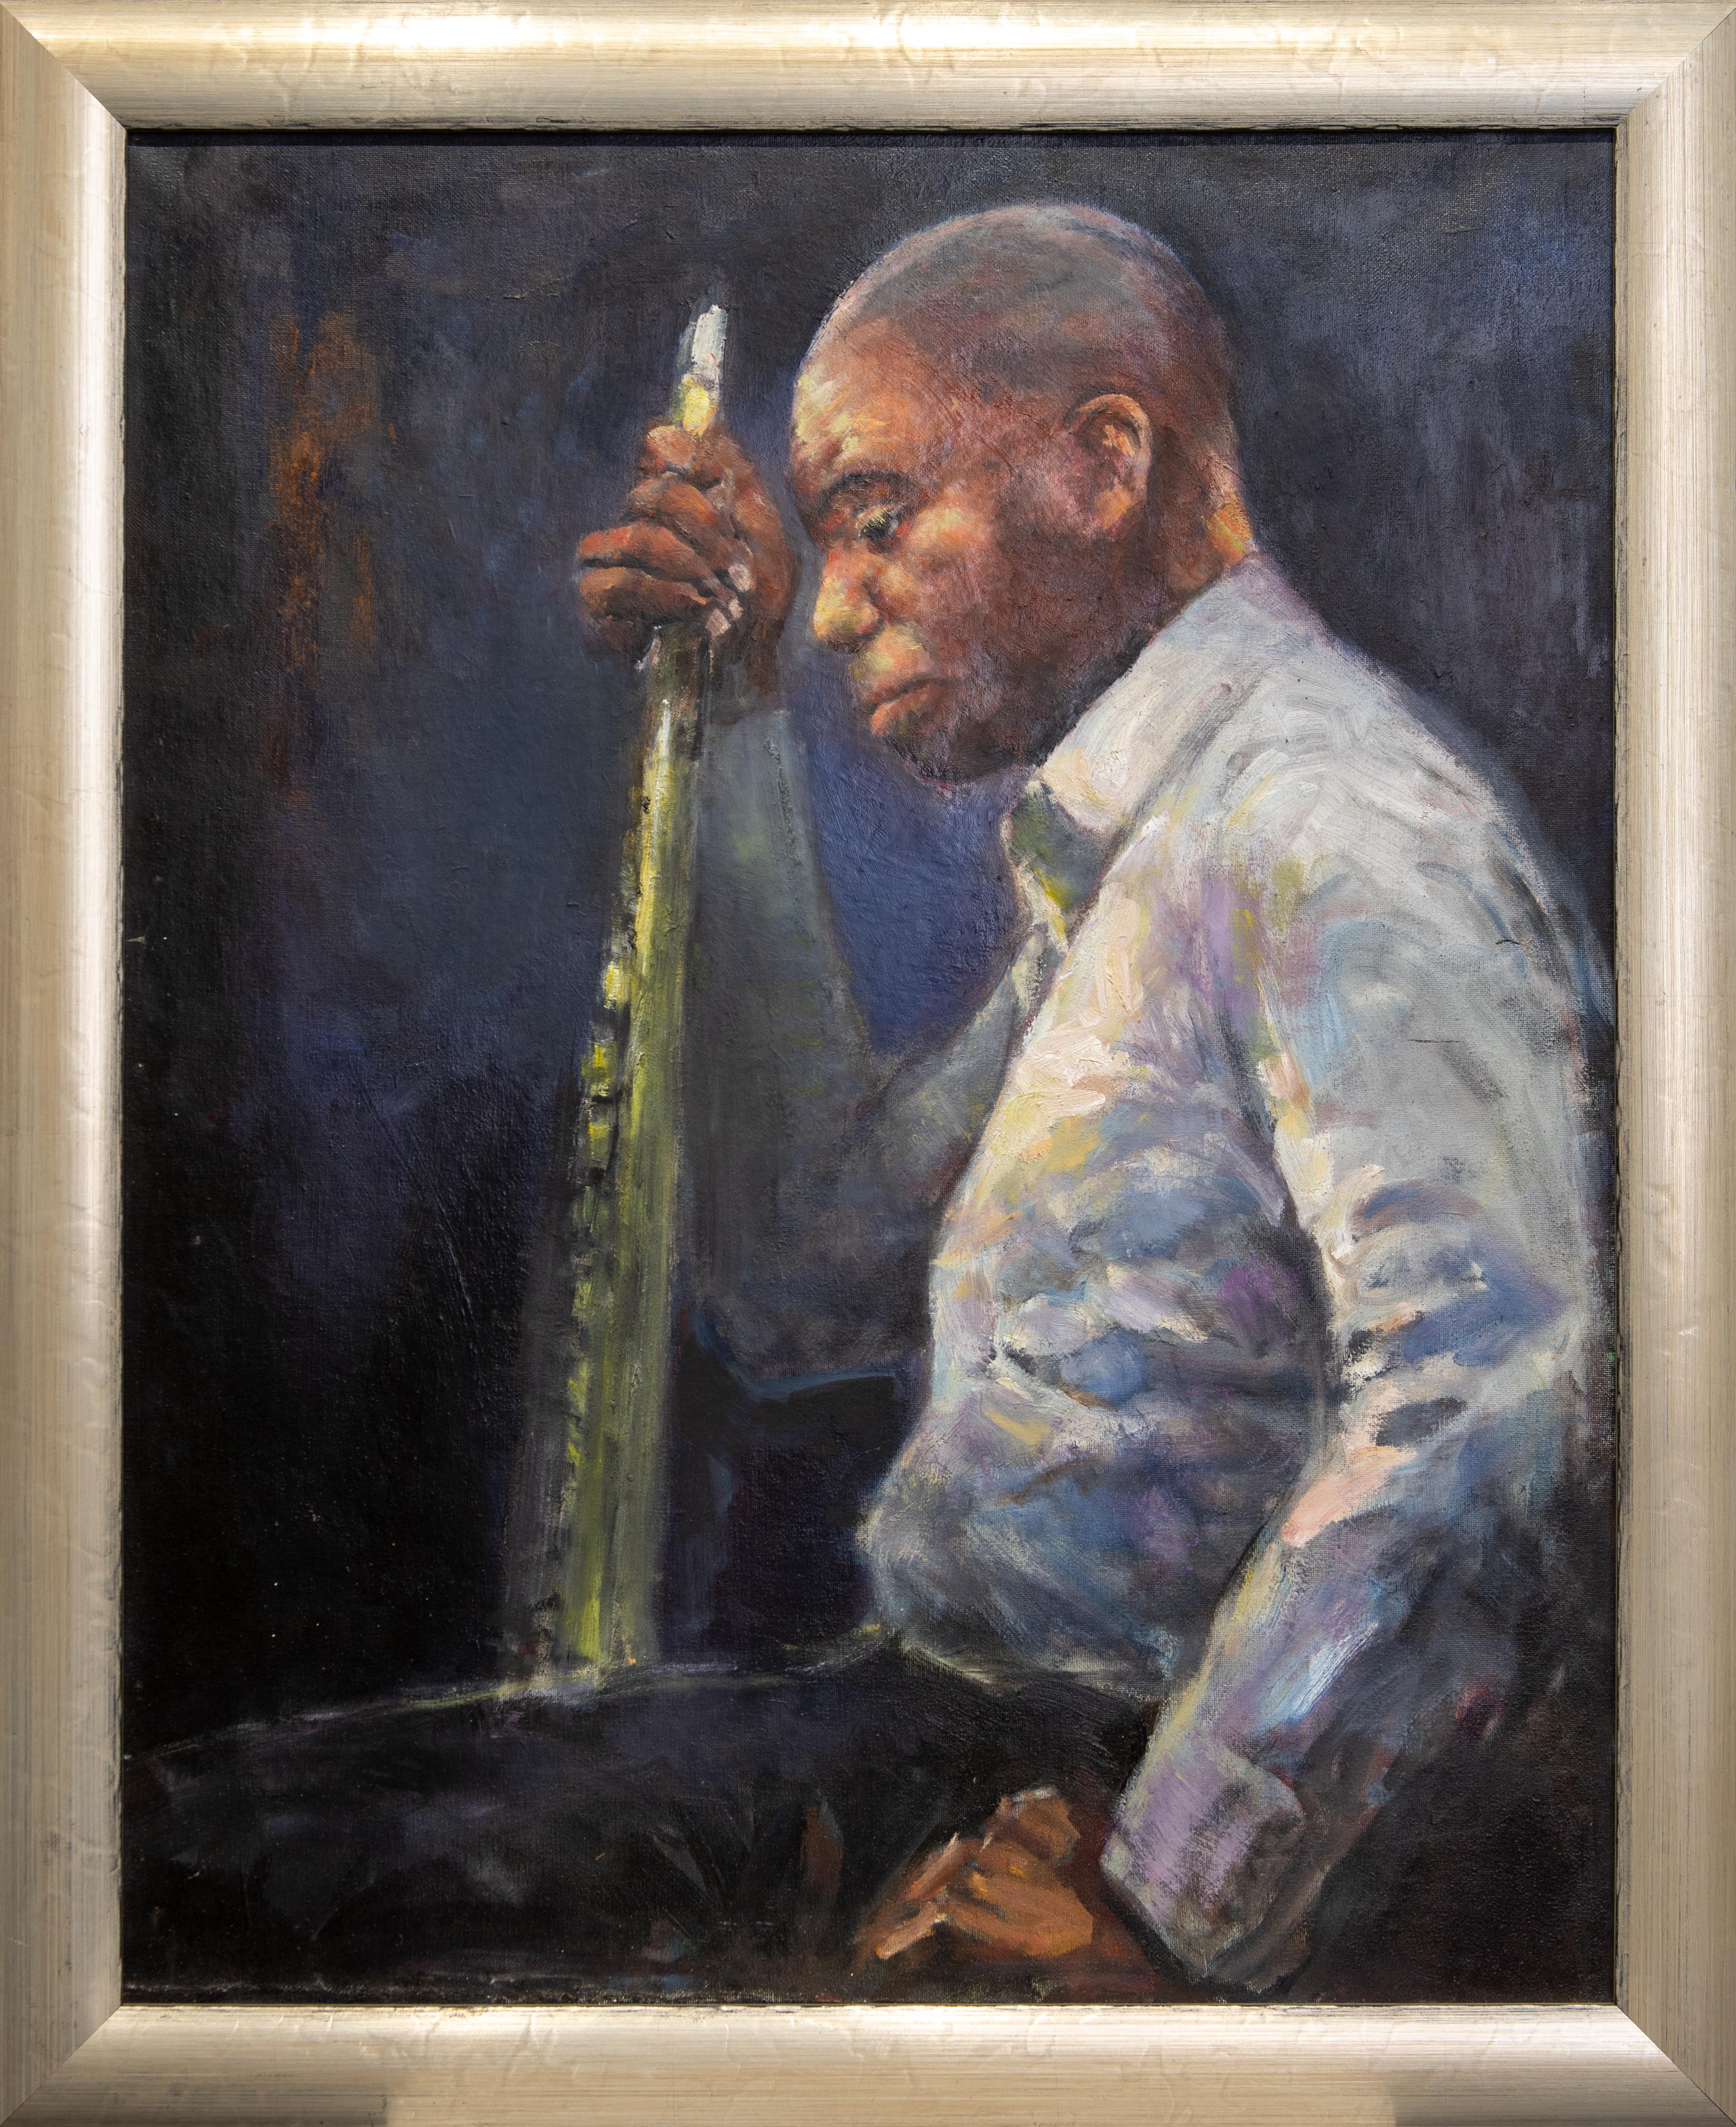 John Osler Figurative Painting - "Branford Marsalis" Musician at Break, Clarinet, Thoughtful, Listening, Oil